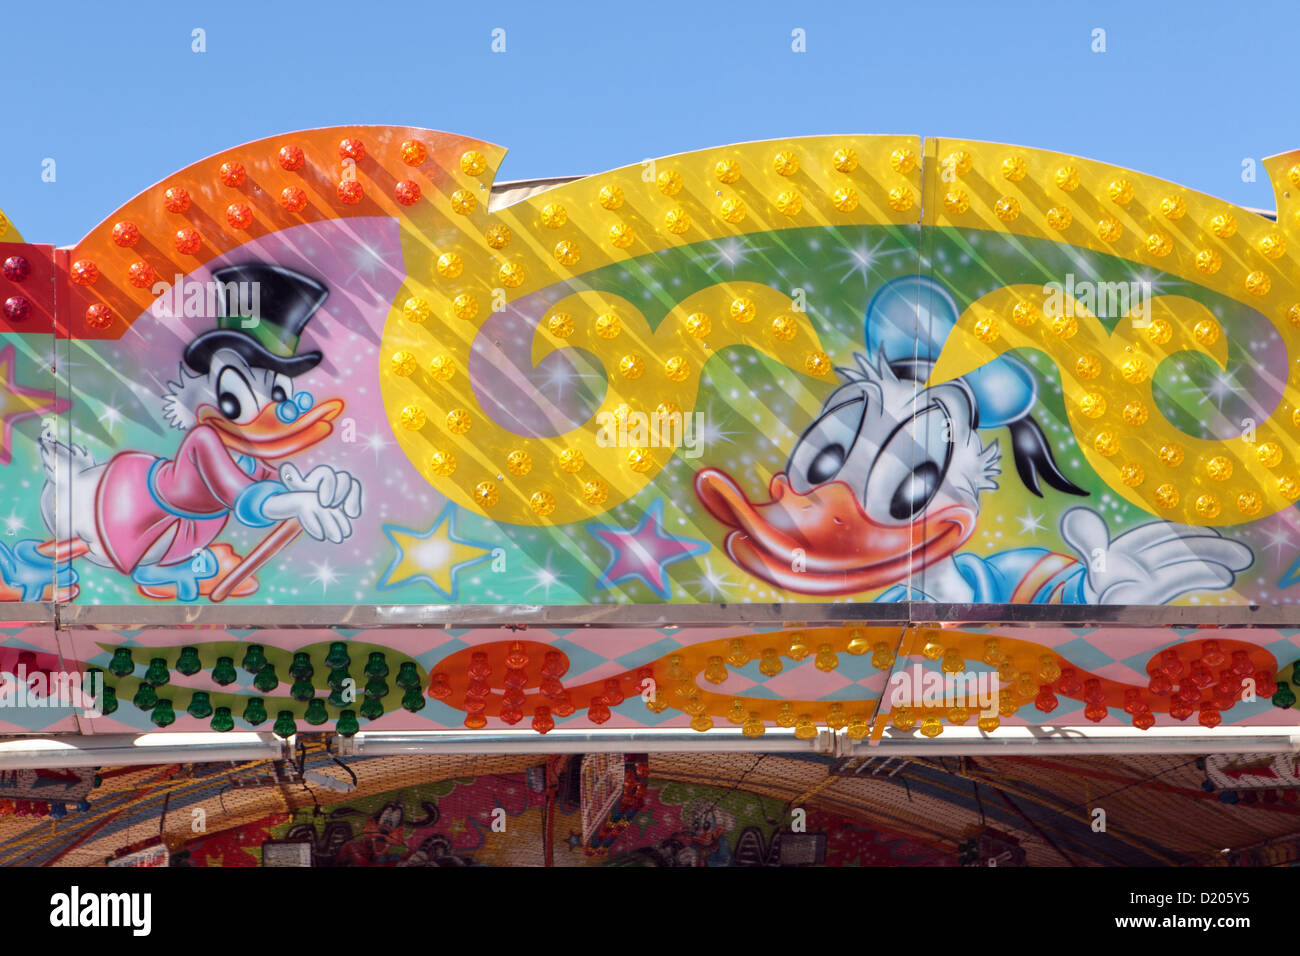 Scrooge McDuck and Donald Duck, images painted onto side of fairground ride, Puerto de la Cruz, Tenerife, Canary Islands Stock Photo